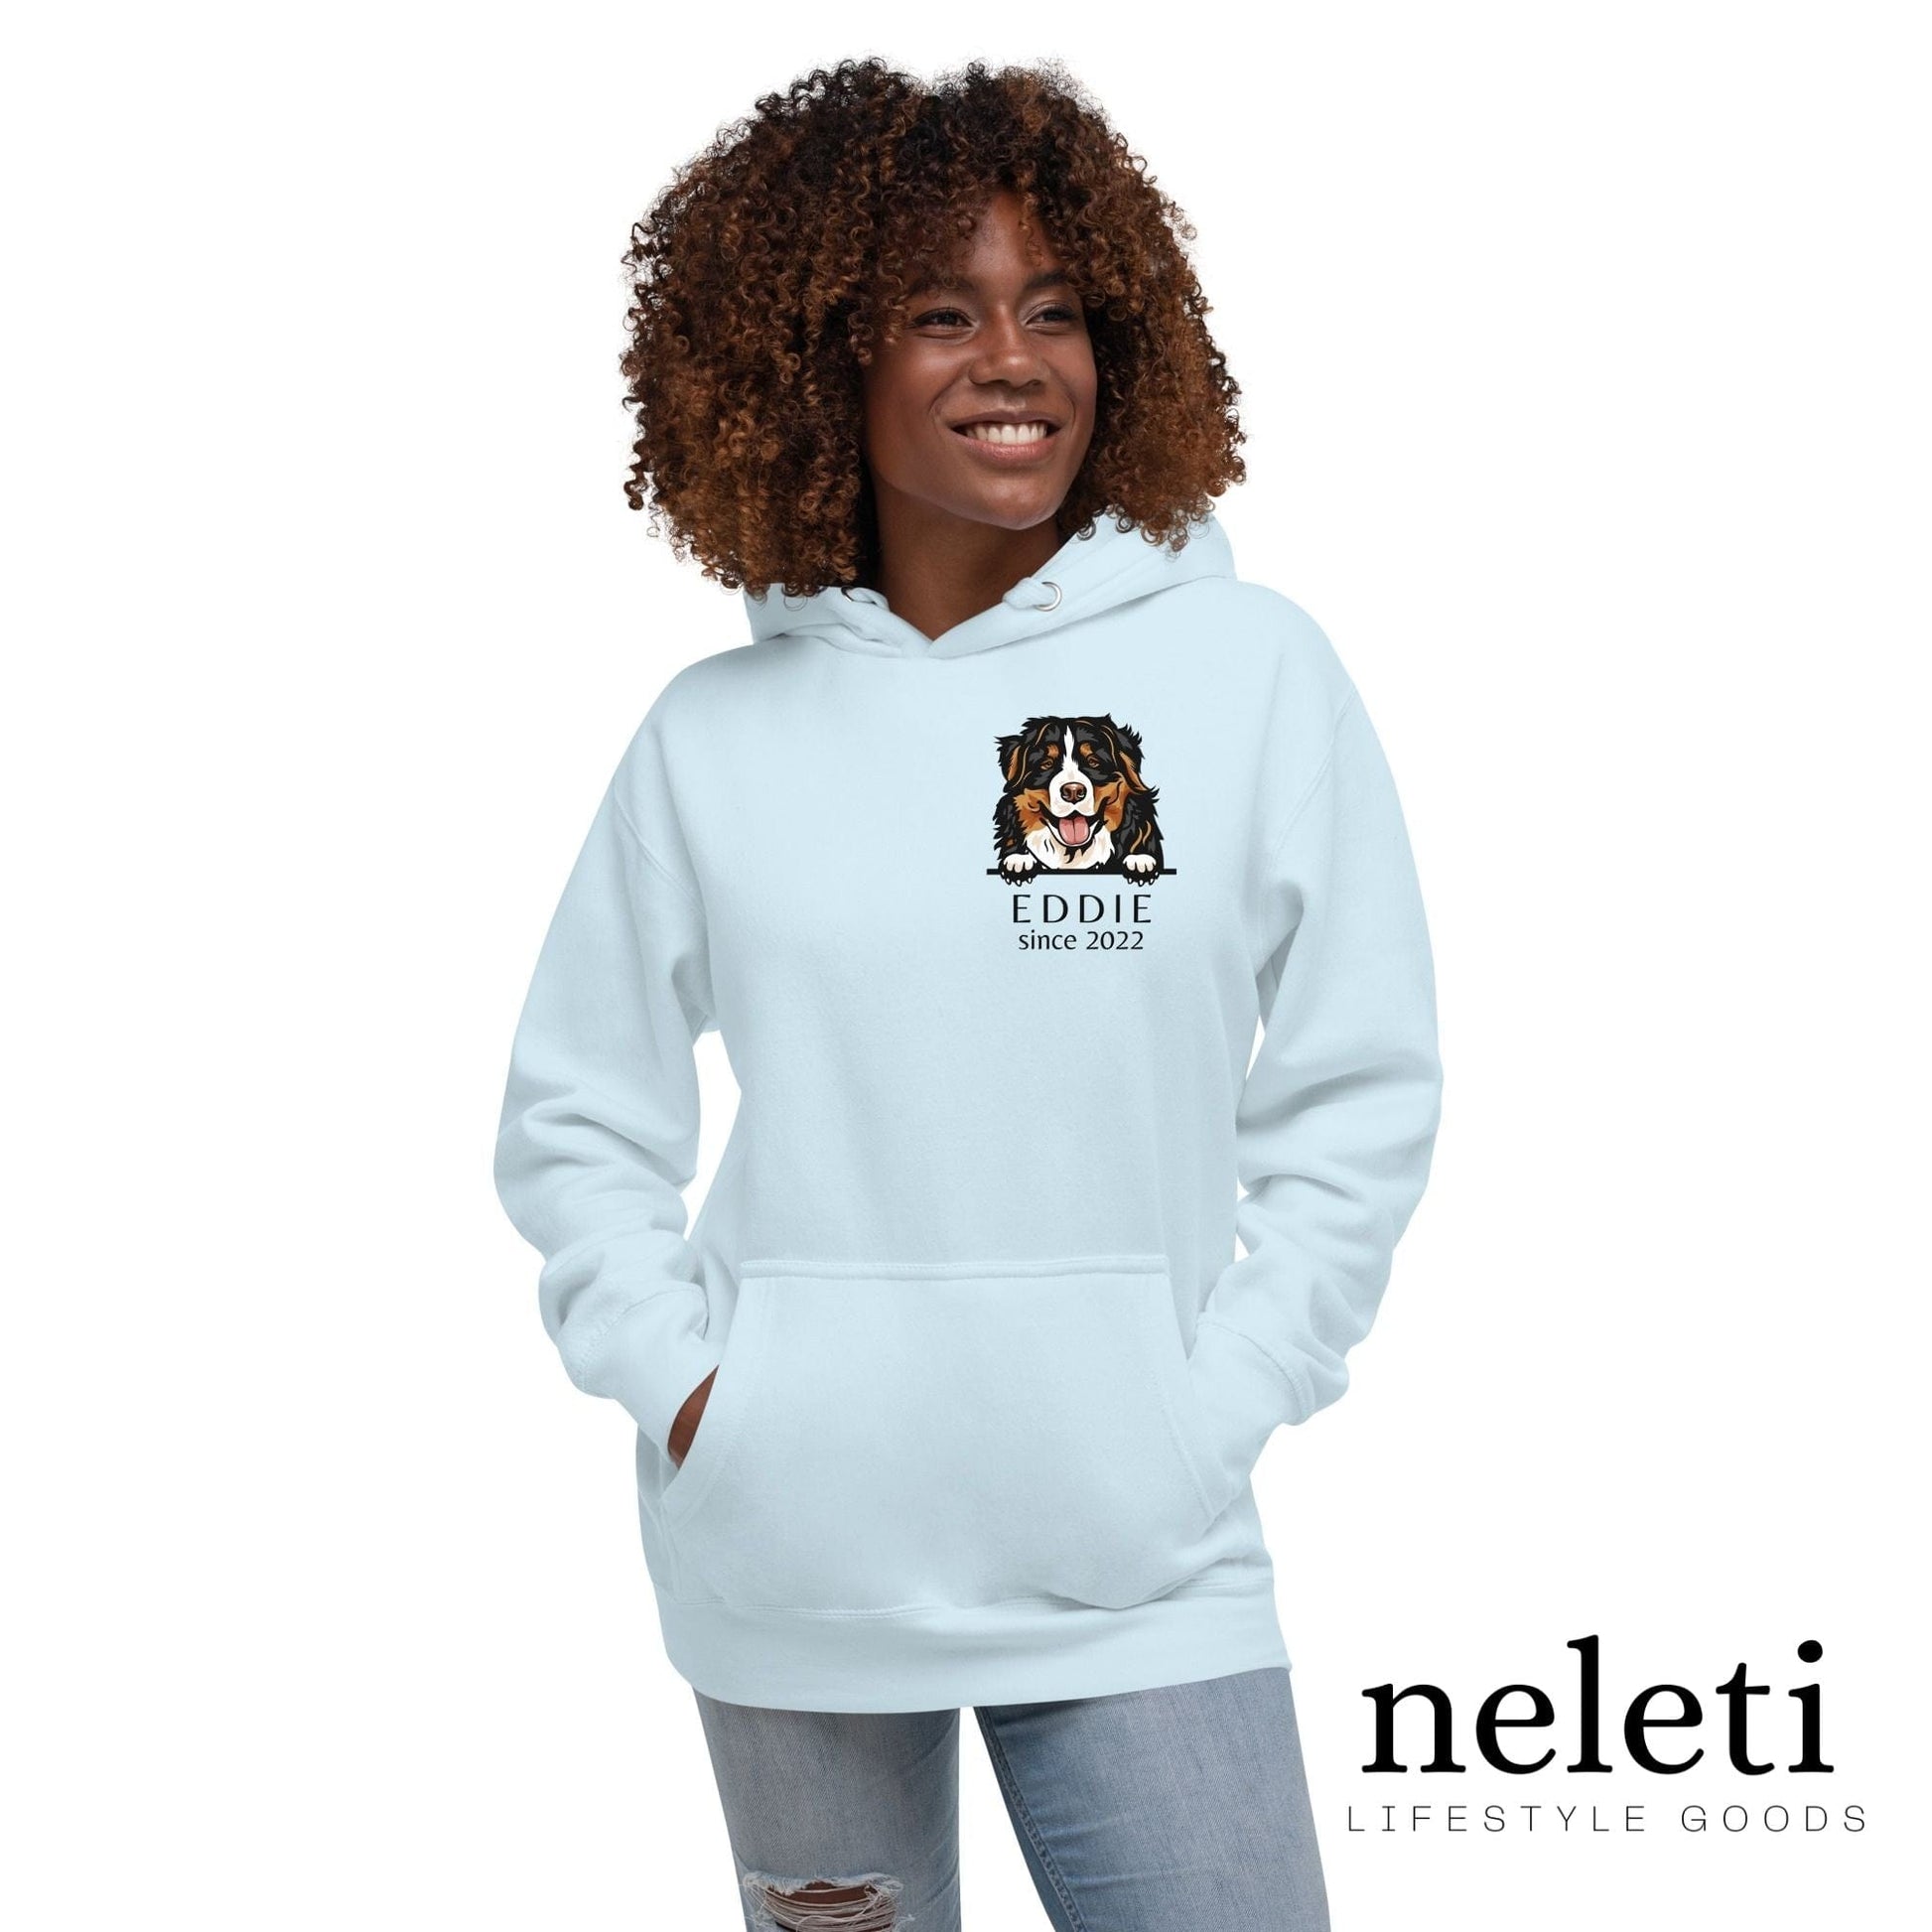 neleti.com-custom-light-blue-hoodie-for-dog-lovers